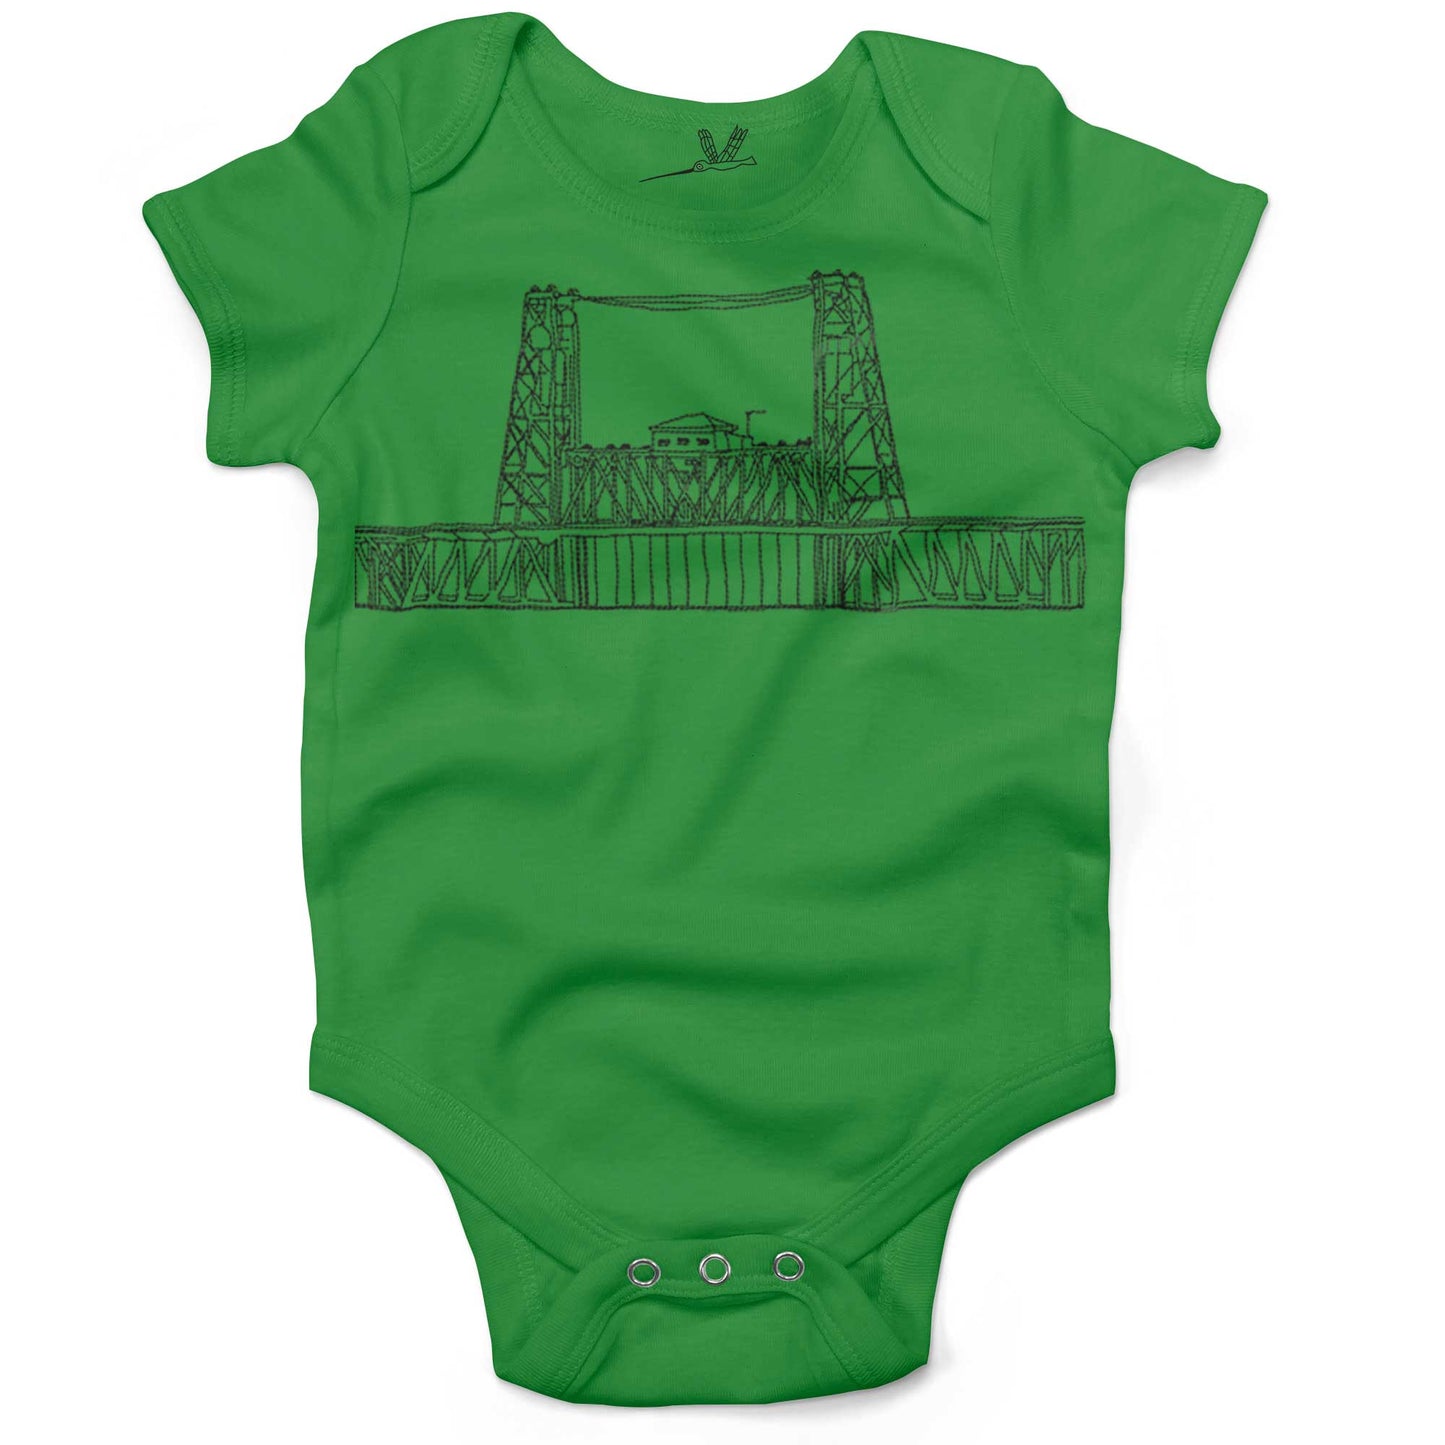 Steel Bridge Infant Bodysuit or Raglan Baby Tee-Grass Green-3-6 months